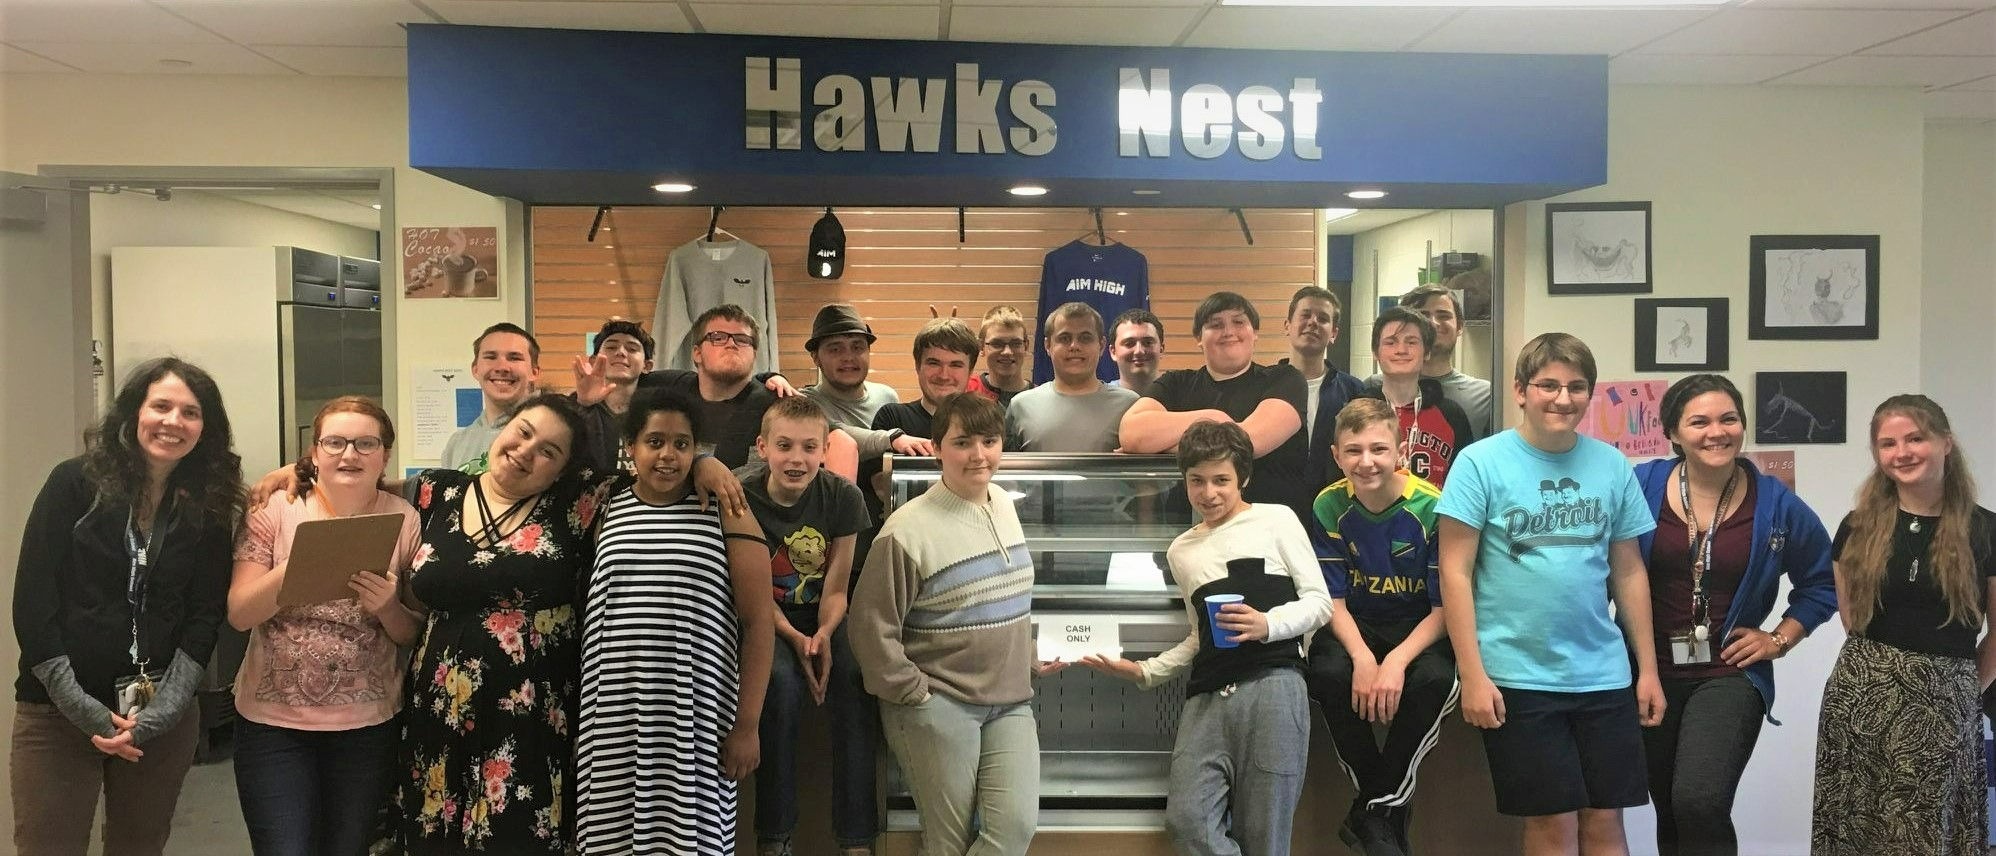 Hawks Nest group